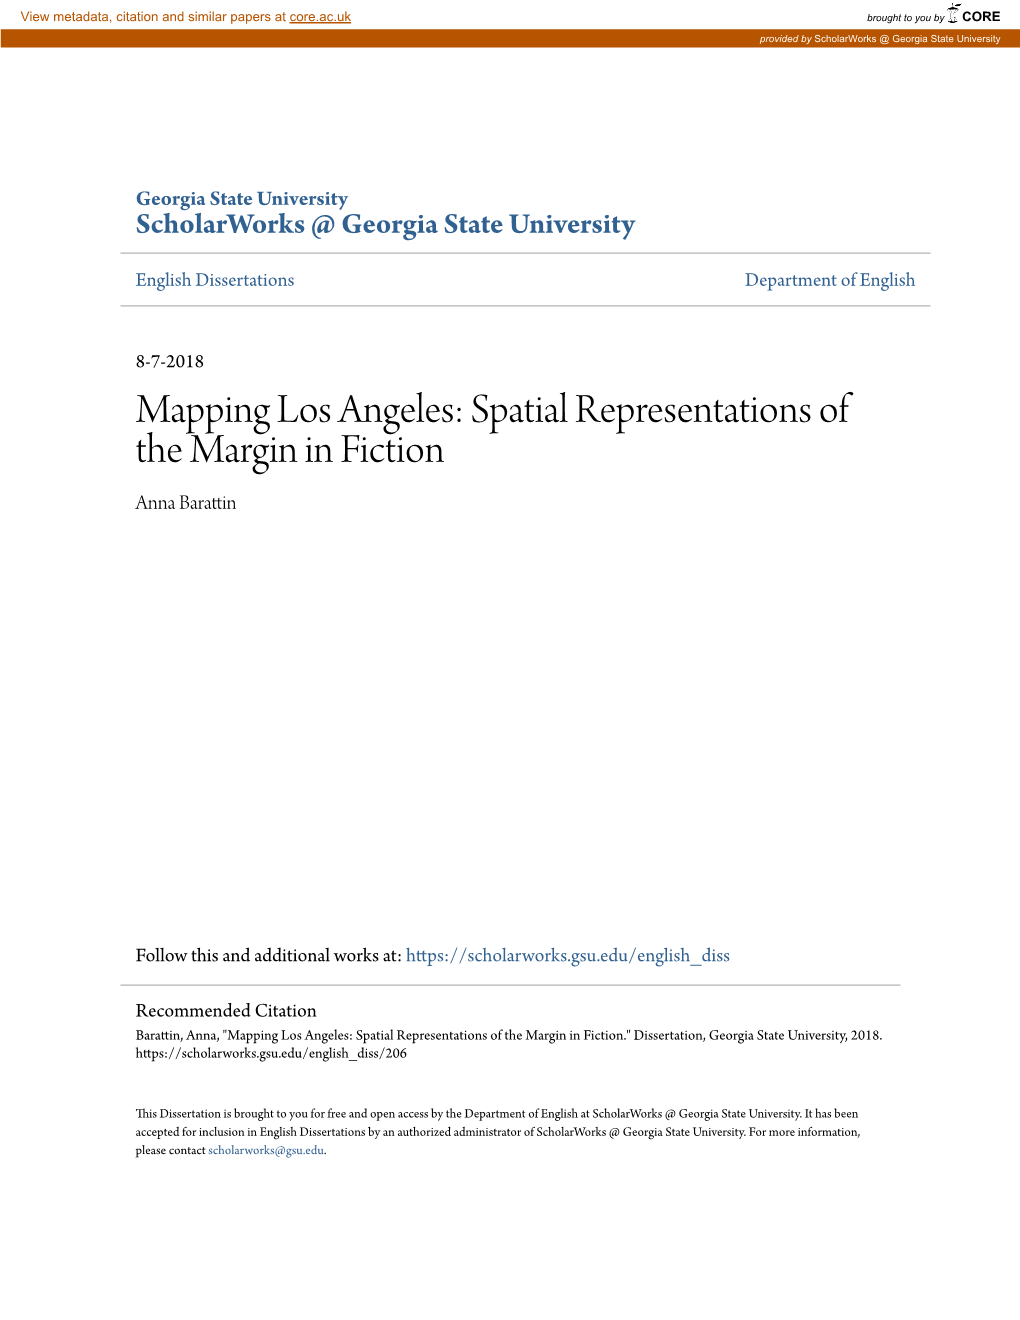 Spatial Representations of the Margin in Fiction Anna Barattin